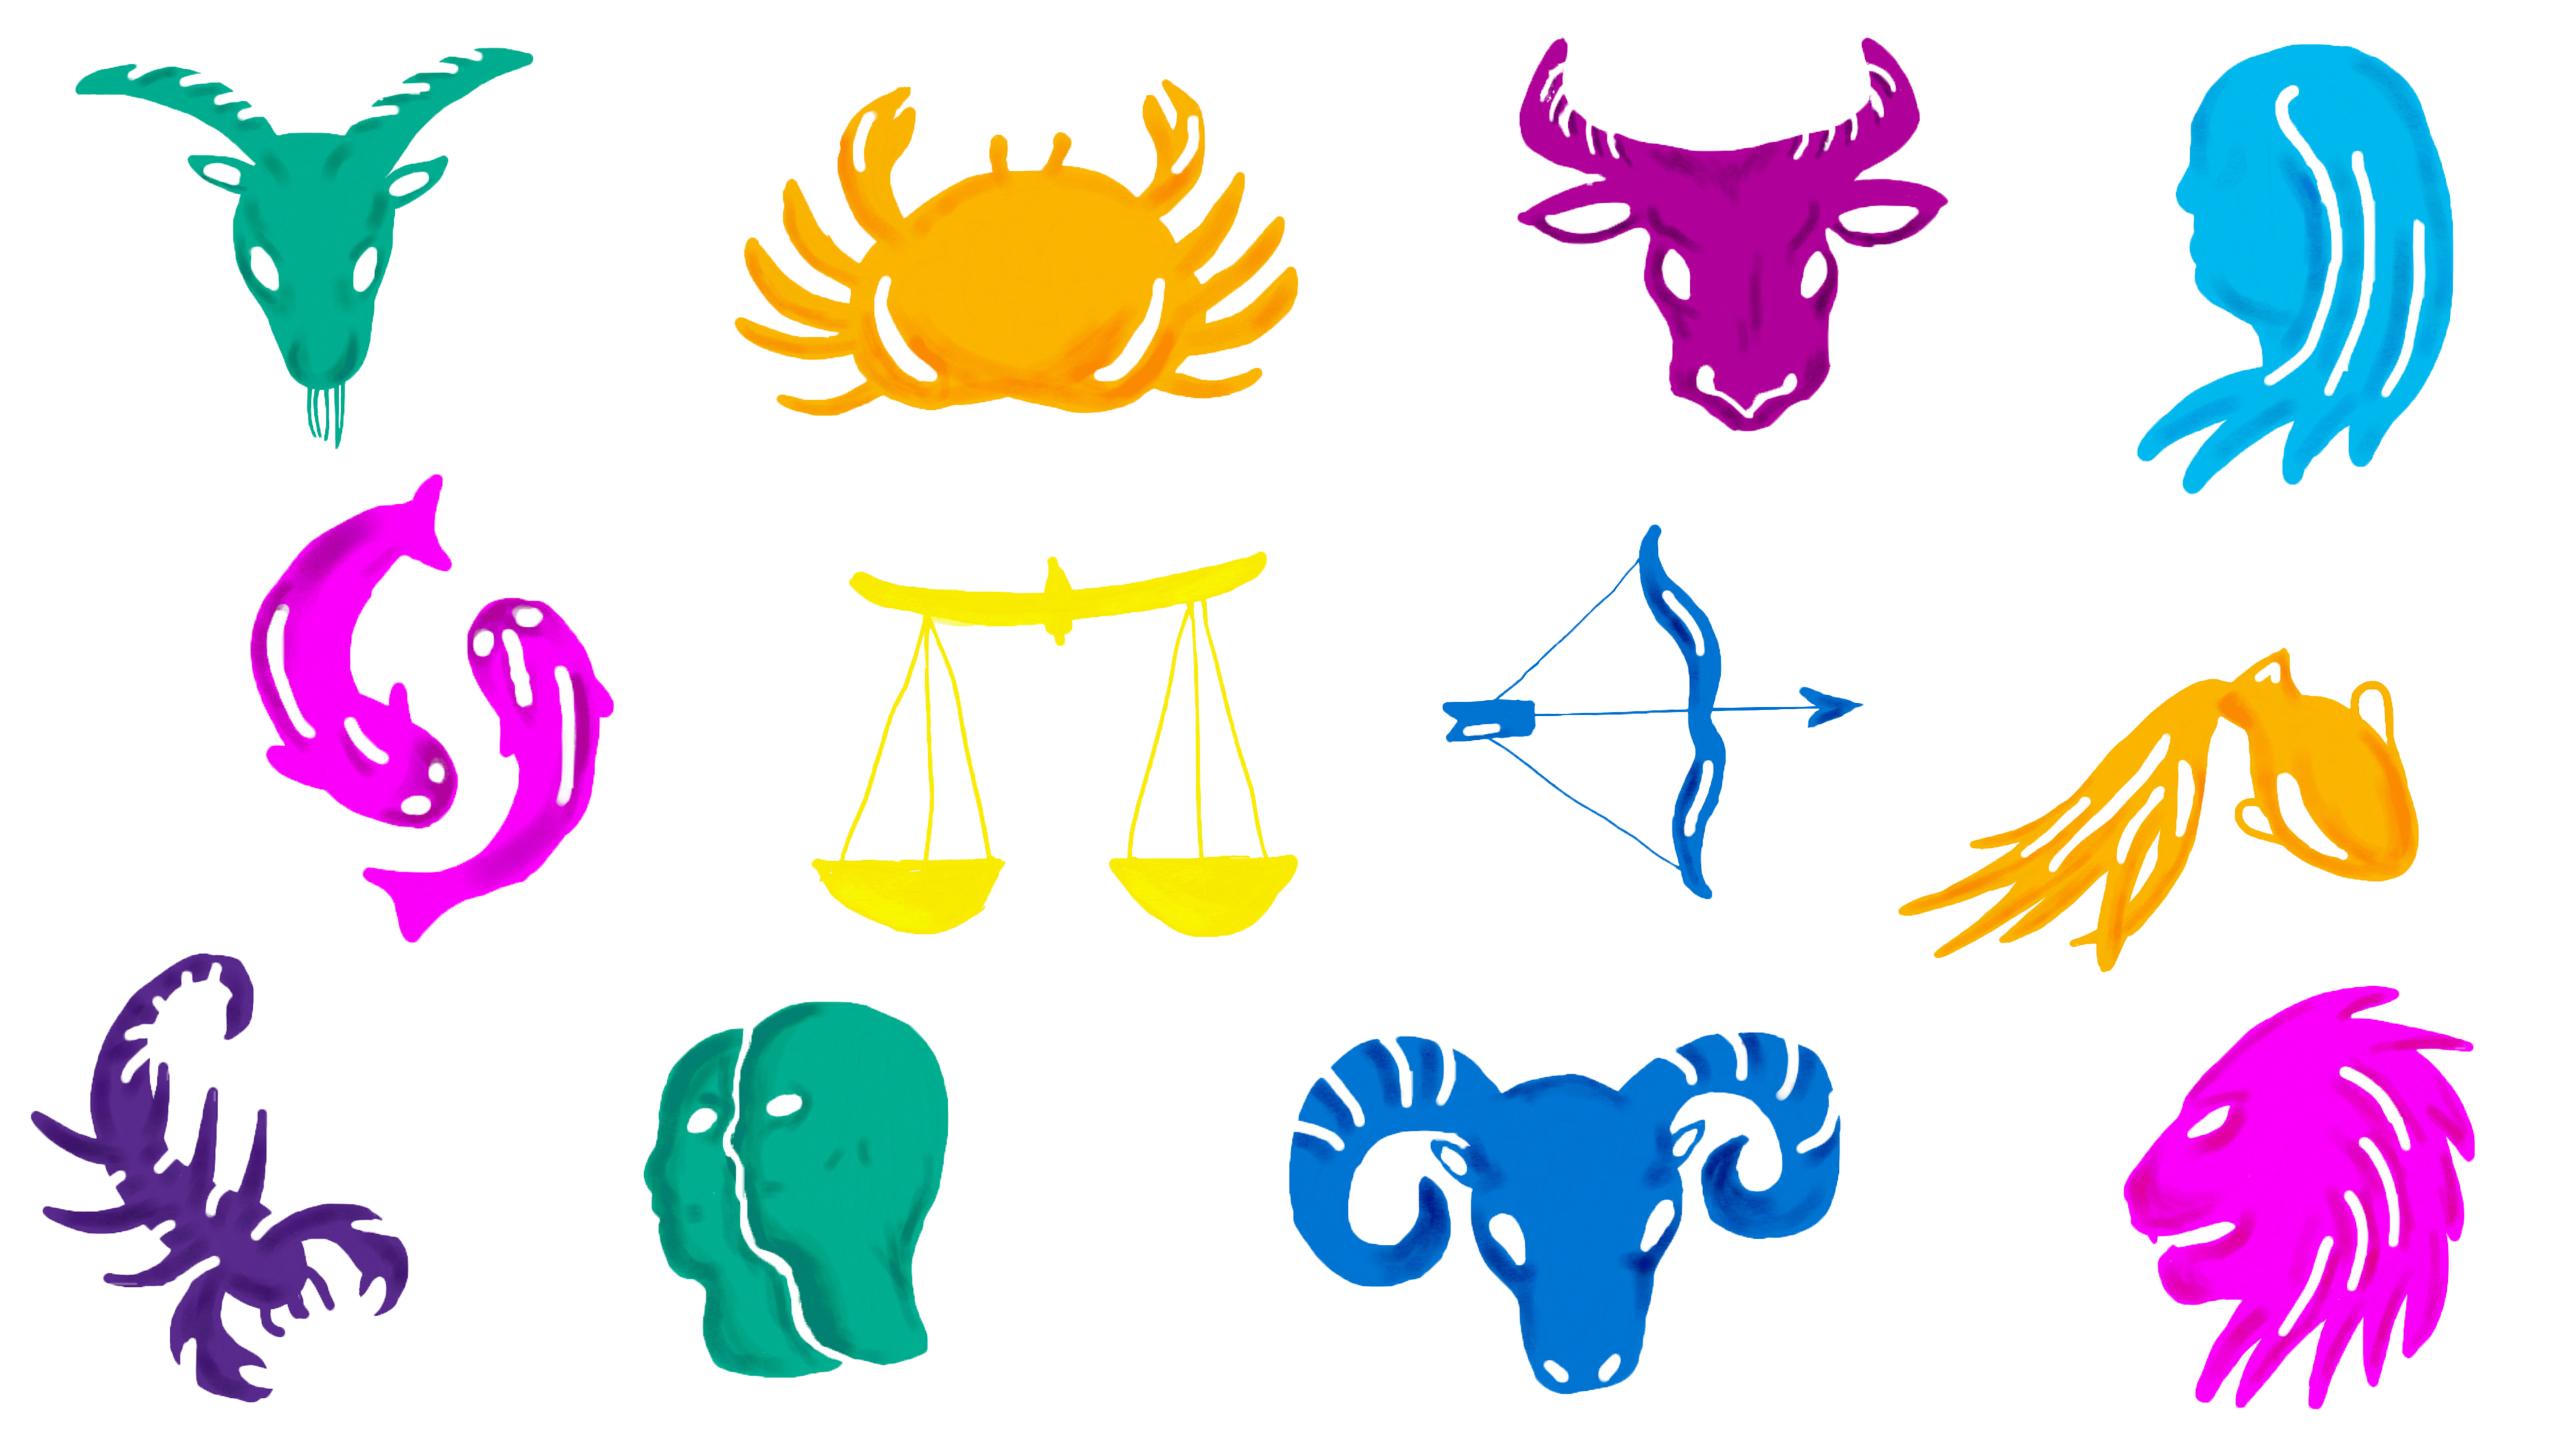 Multi-coloured illustration of the different zodiac sign symbols